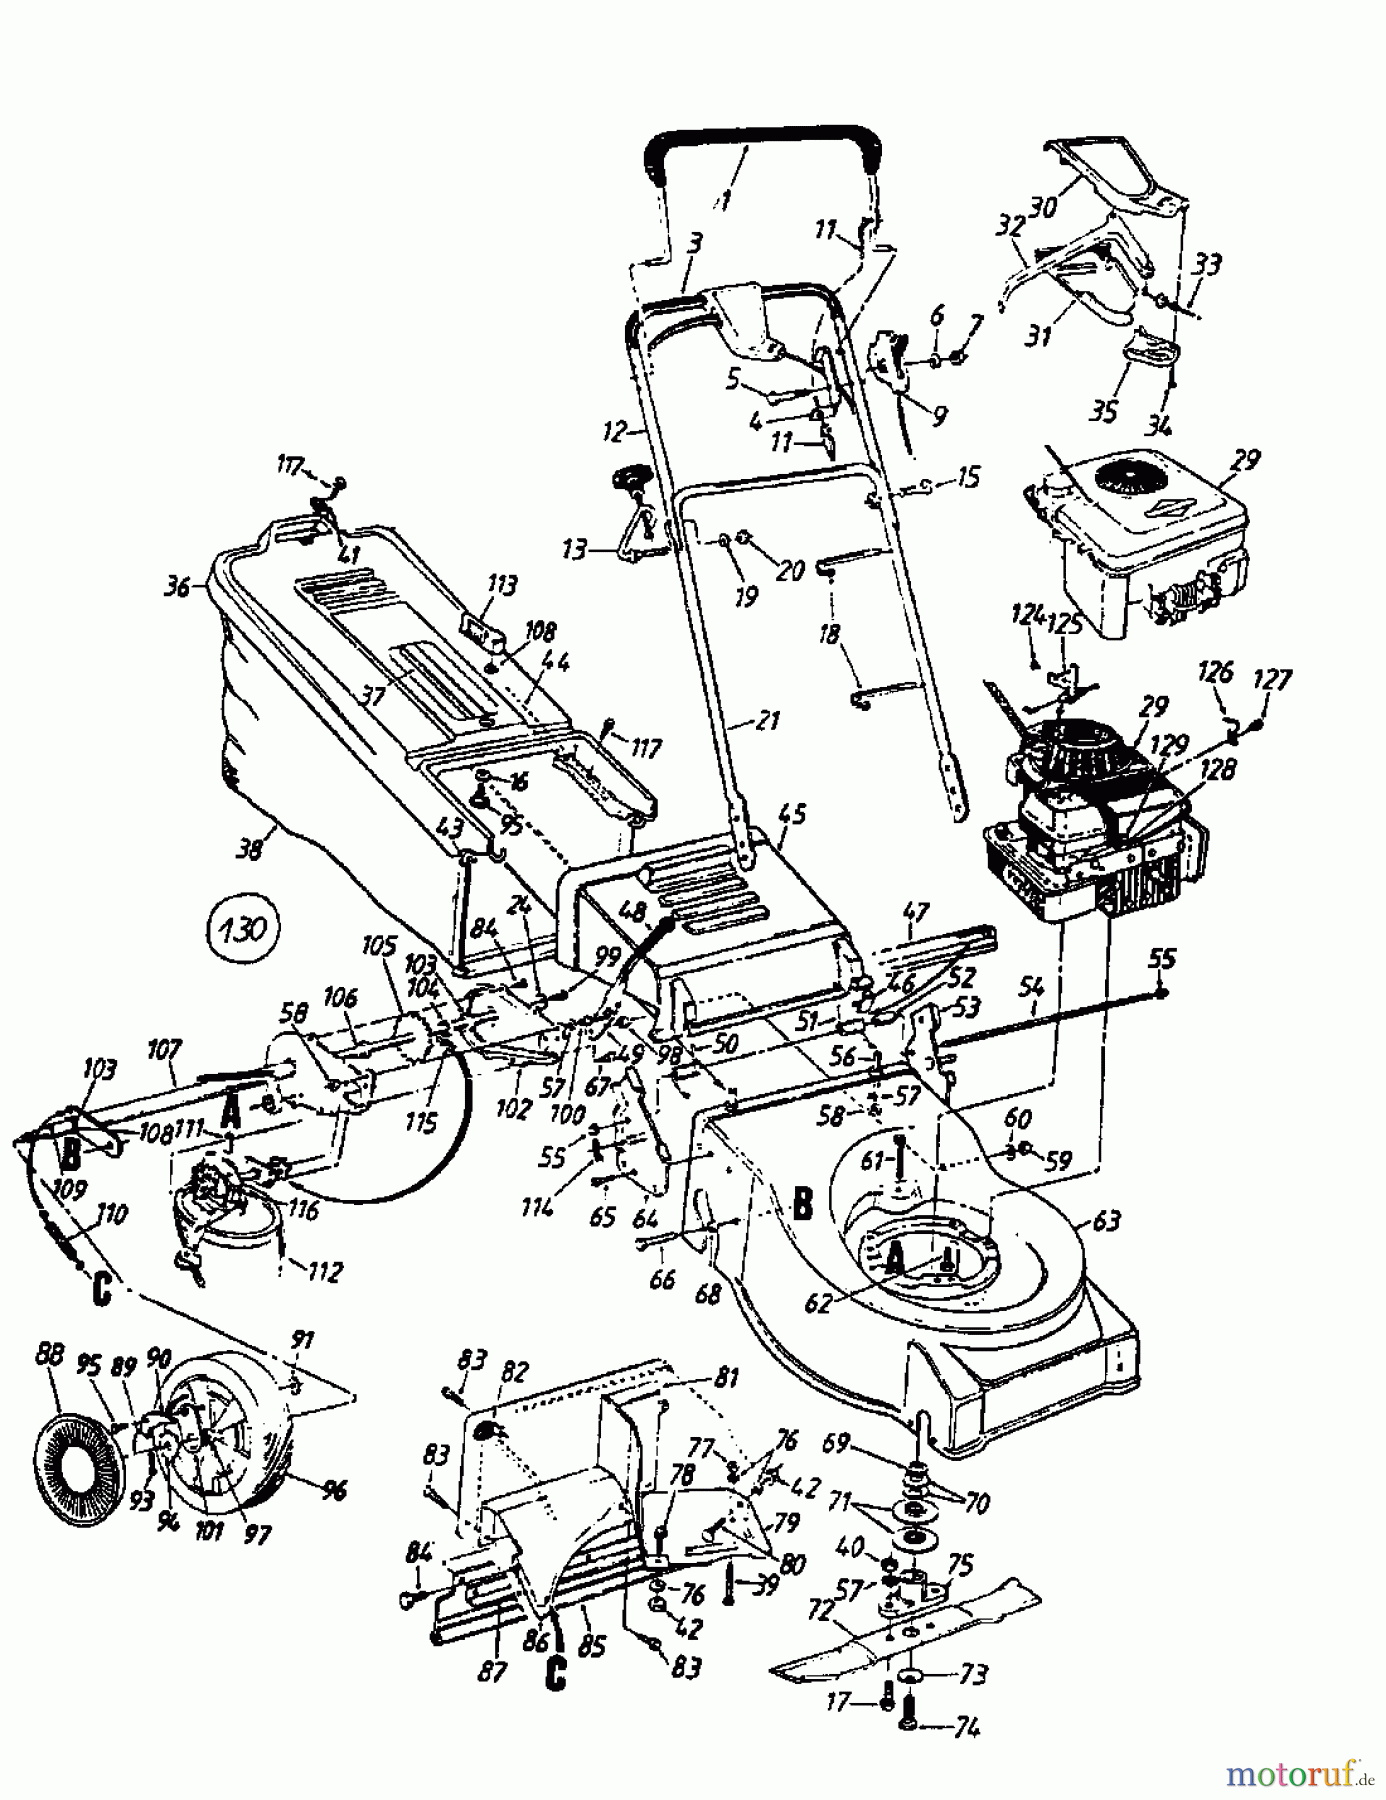  Columbia Petrol mower self propelled CS 53 120-476R  (1990) Basic machine